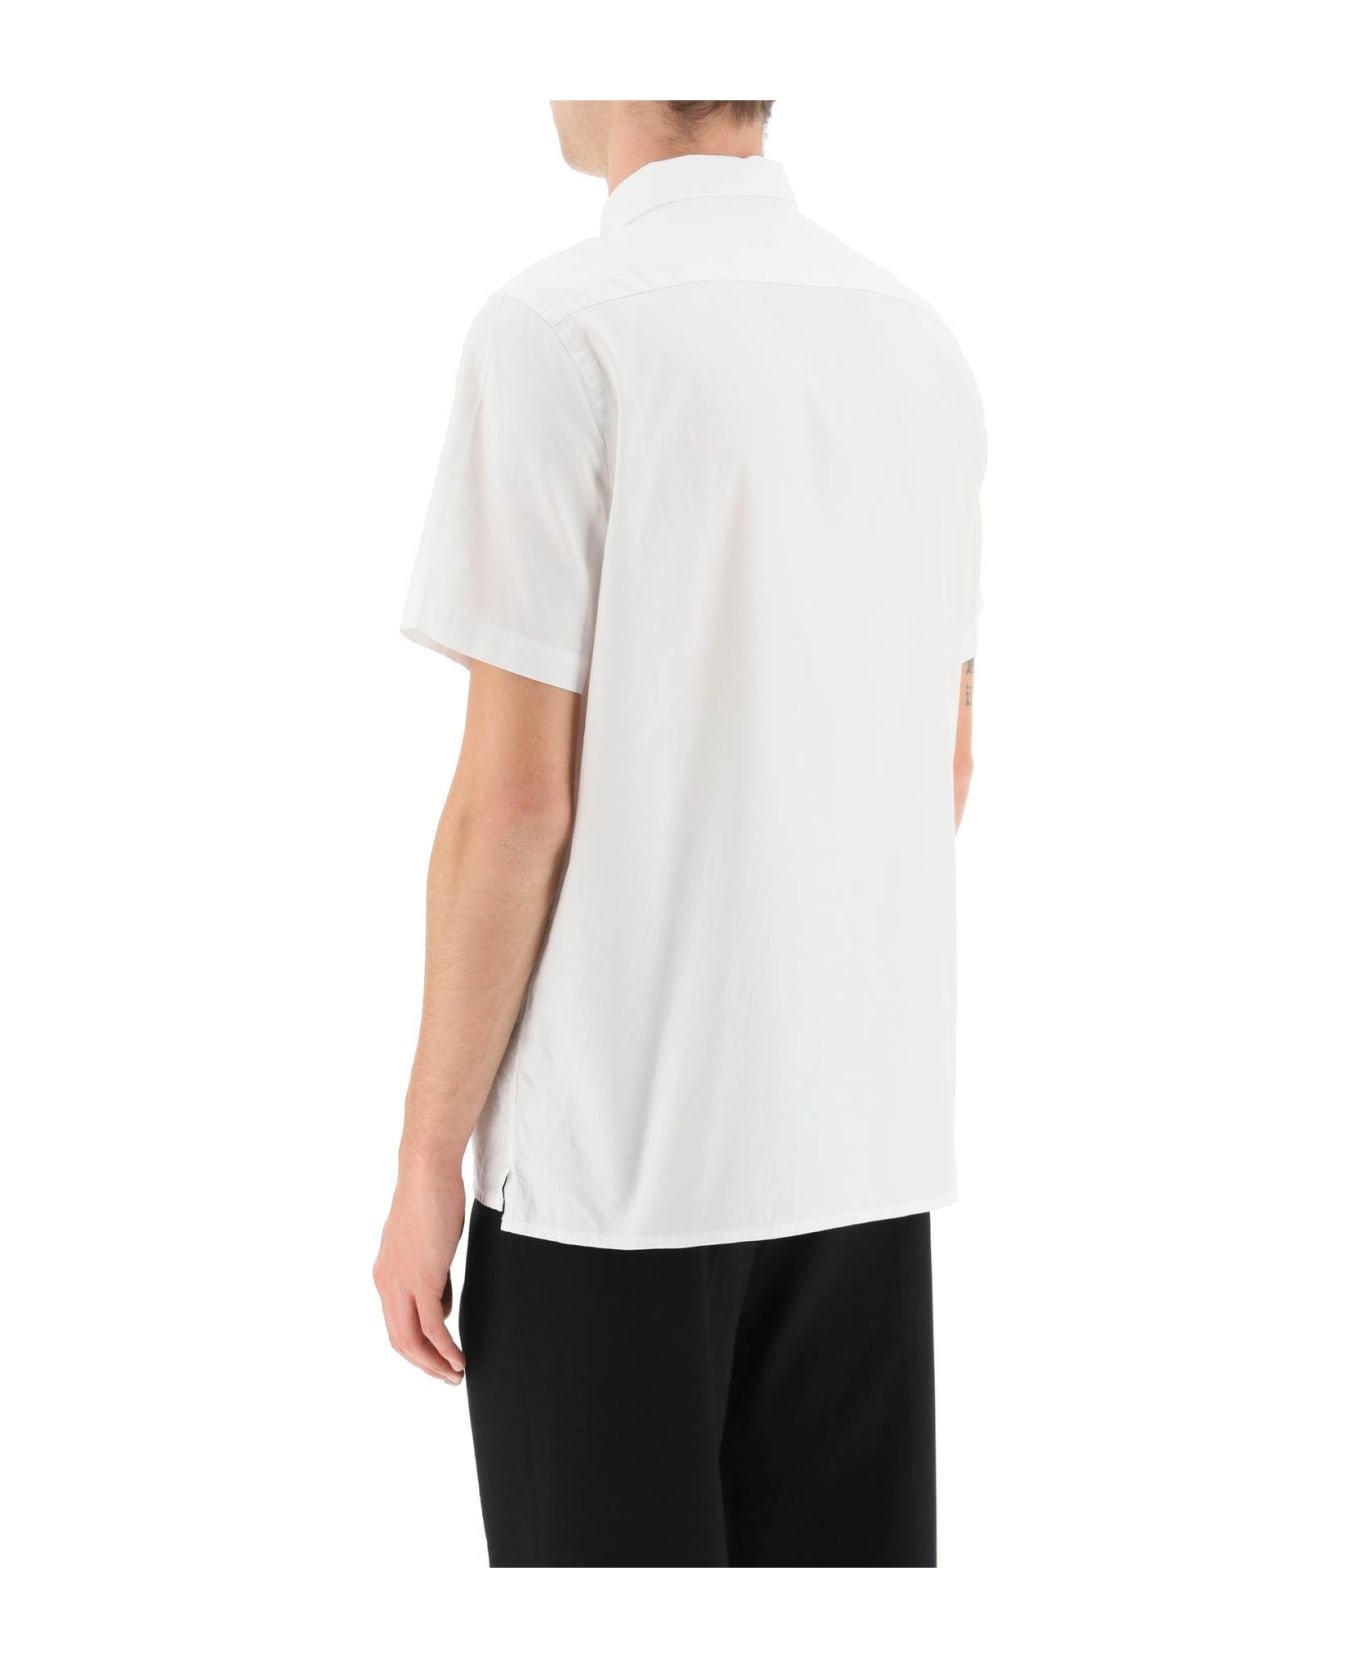 PS by Paul Smith Zebra Patch Shirt - WHITE (White)